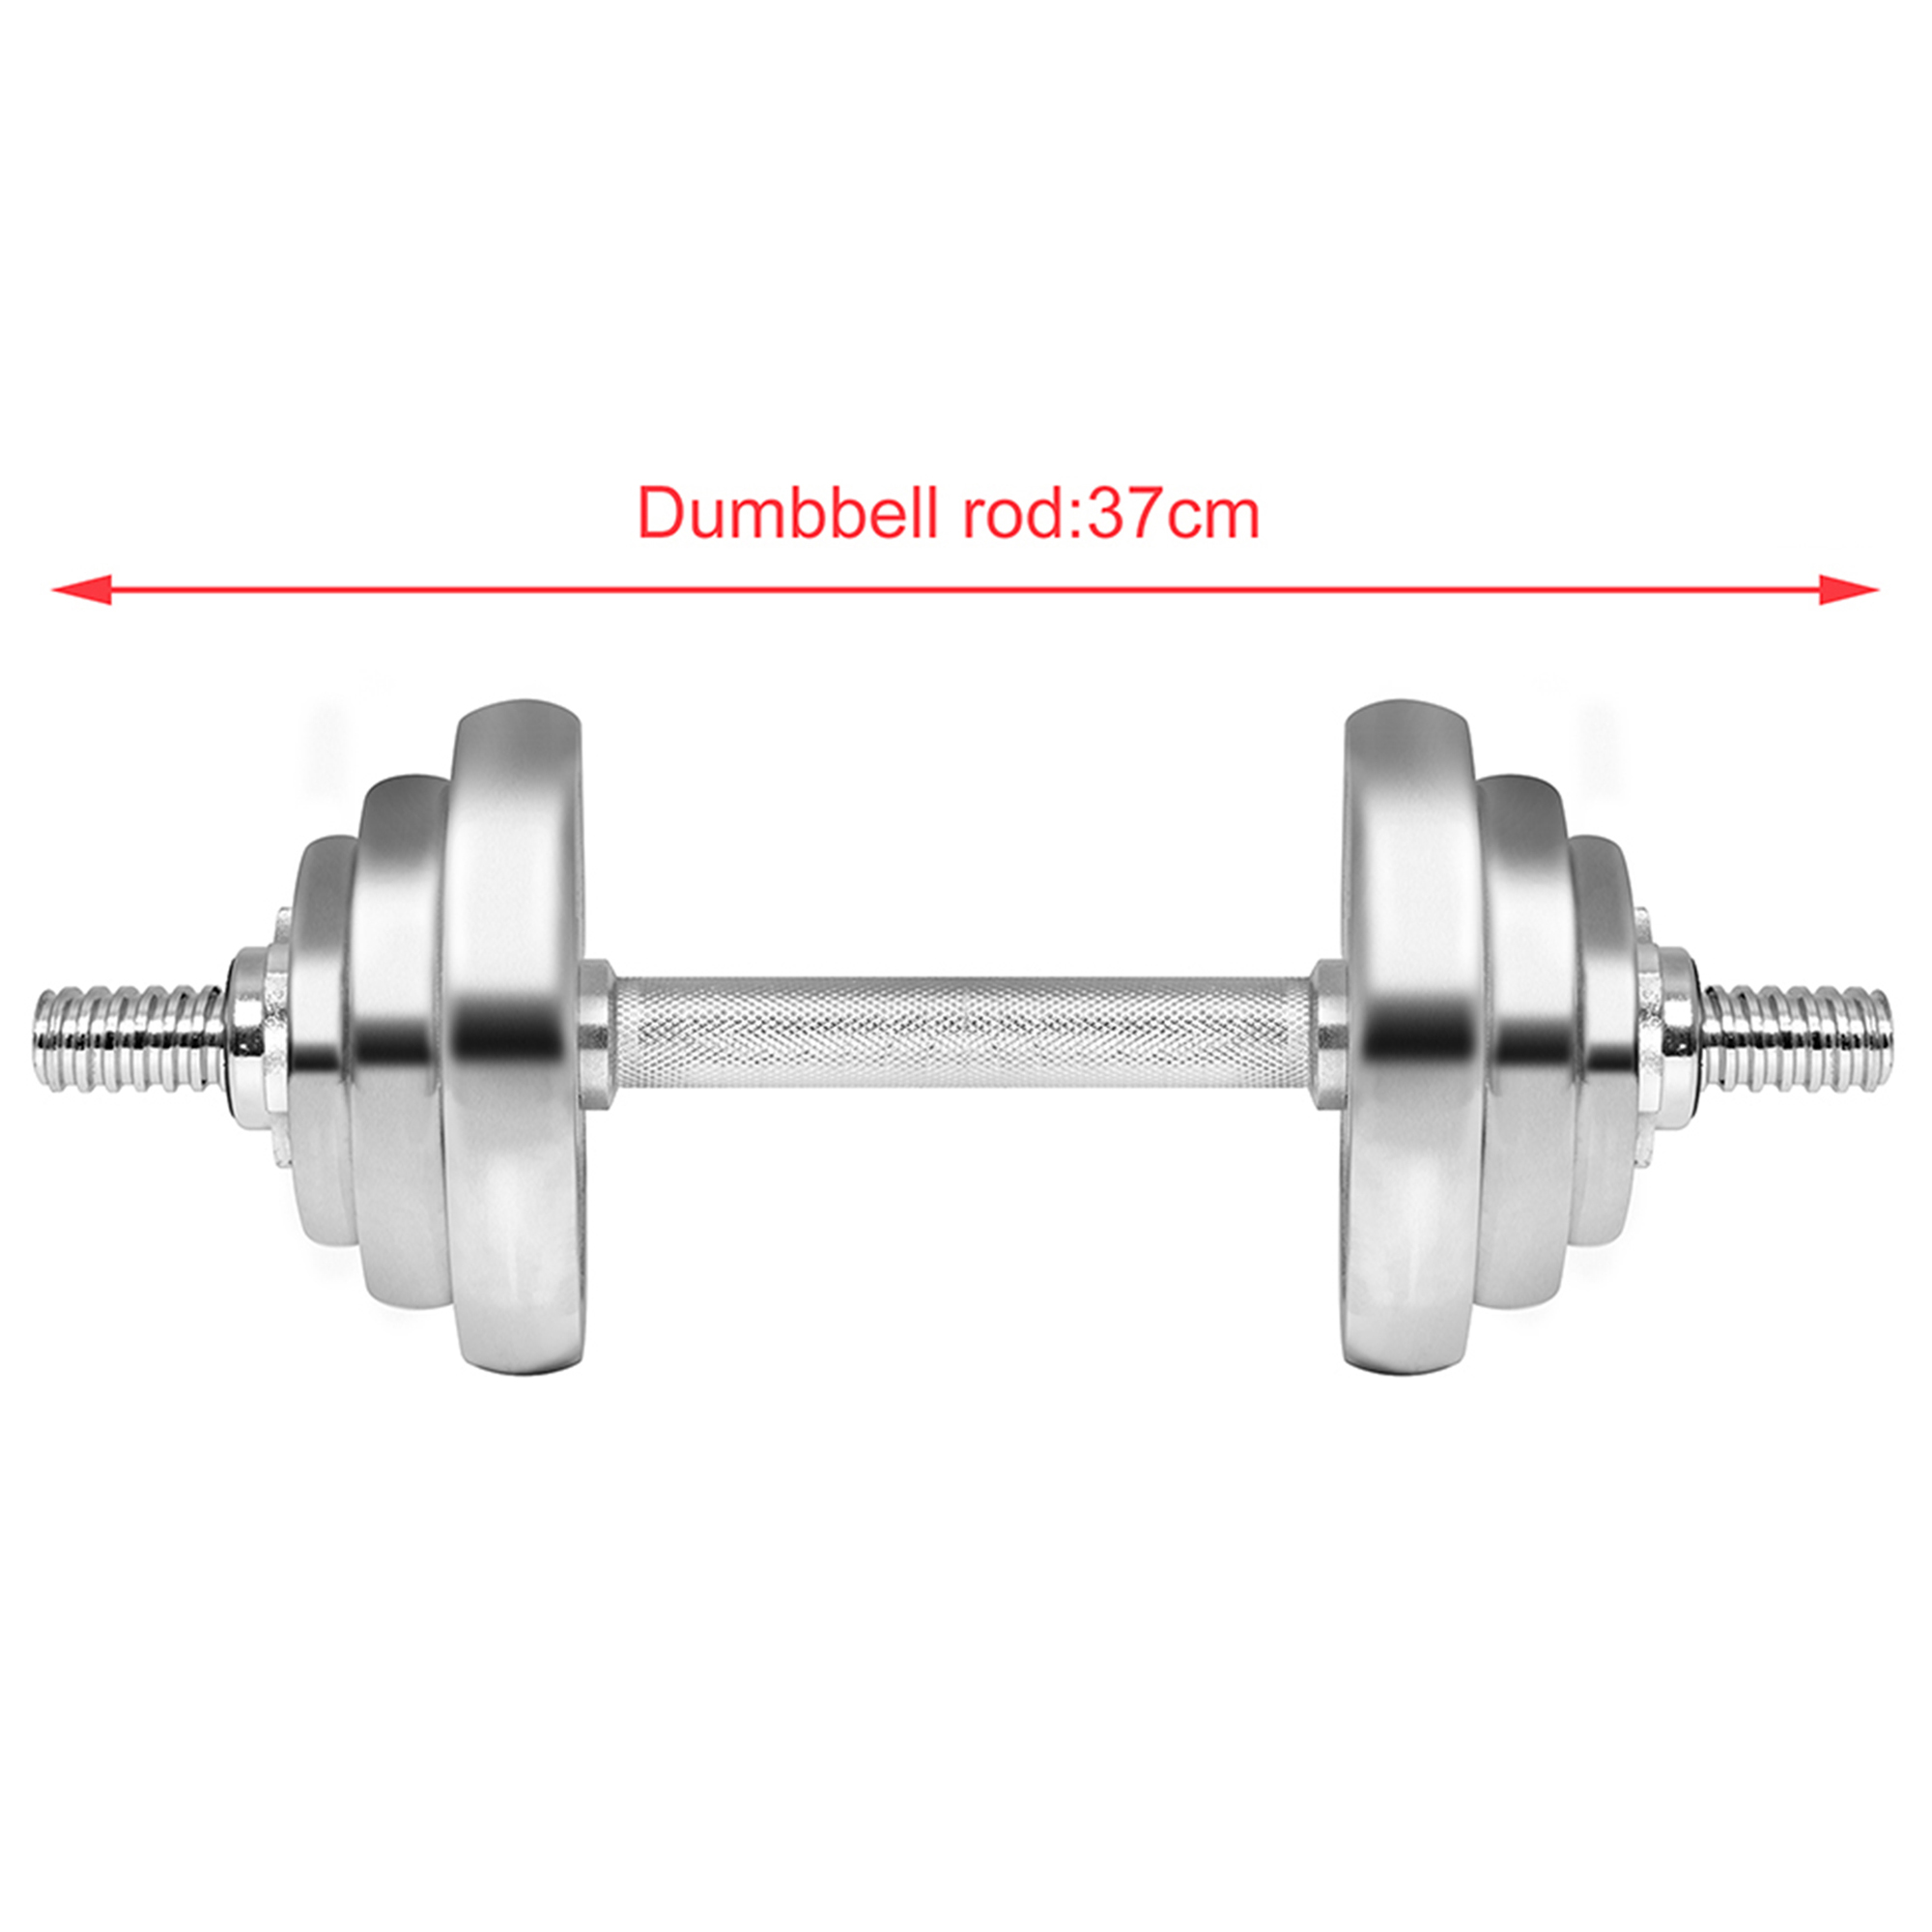 SAYFUT 66LB Dumbbell Weight Set Detachable Fitness Dumbbells Barbells Adjustable for Gym Household Exercise, Silver - image 5 of 6